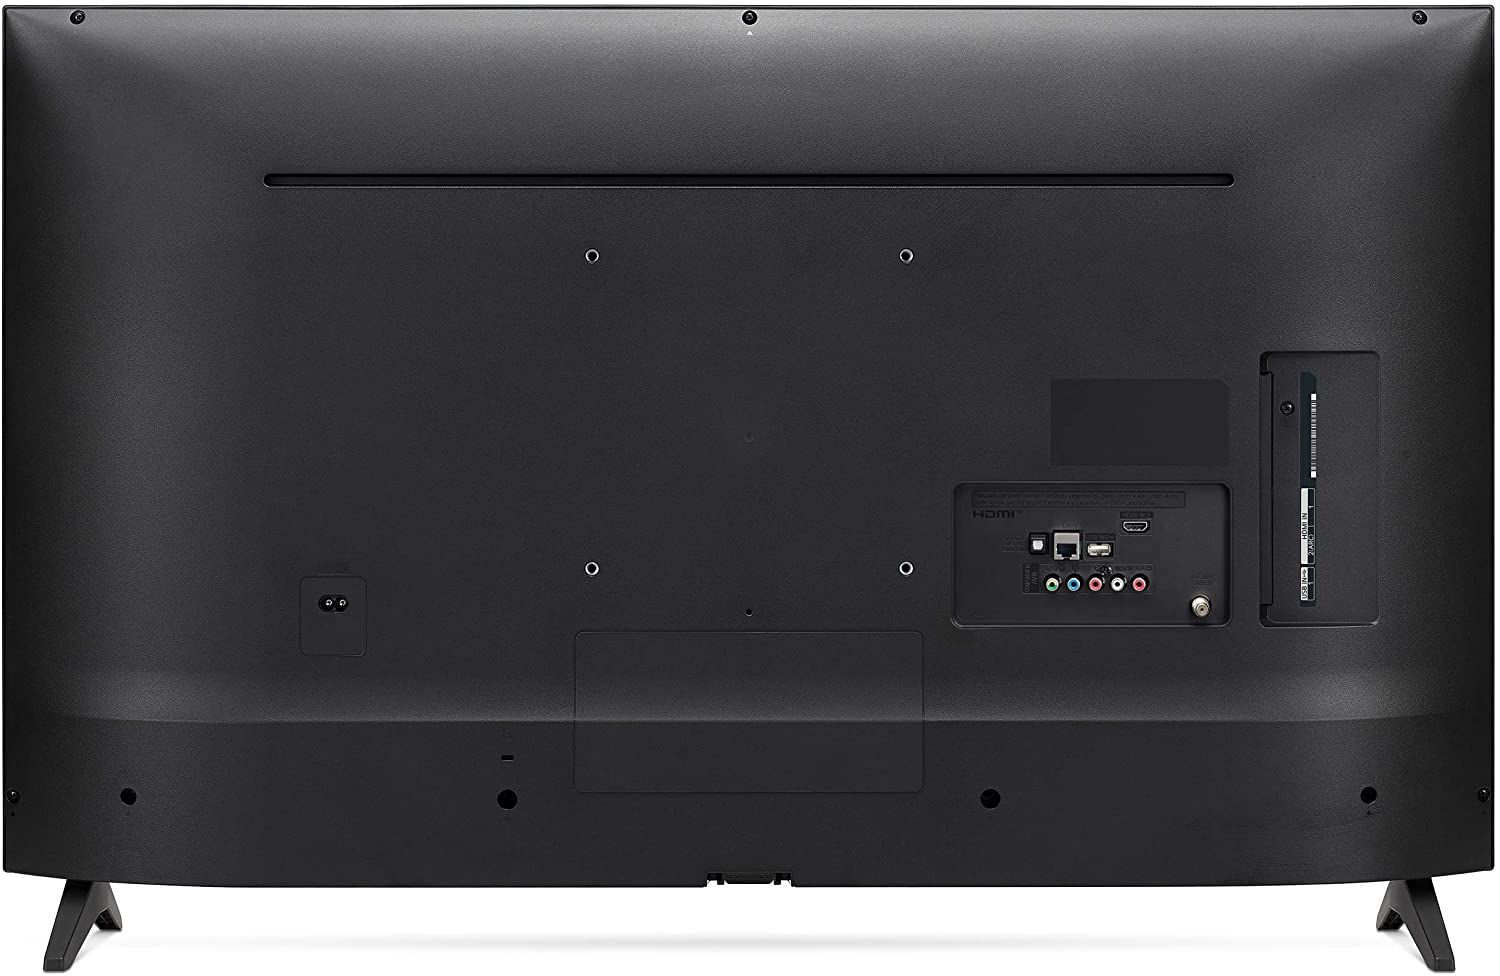 LG 43-inch 4K Ultra HD ports